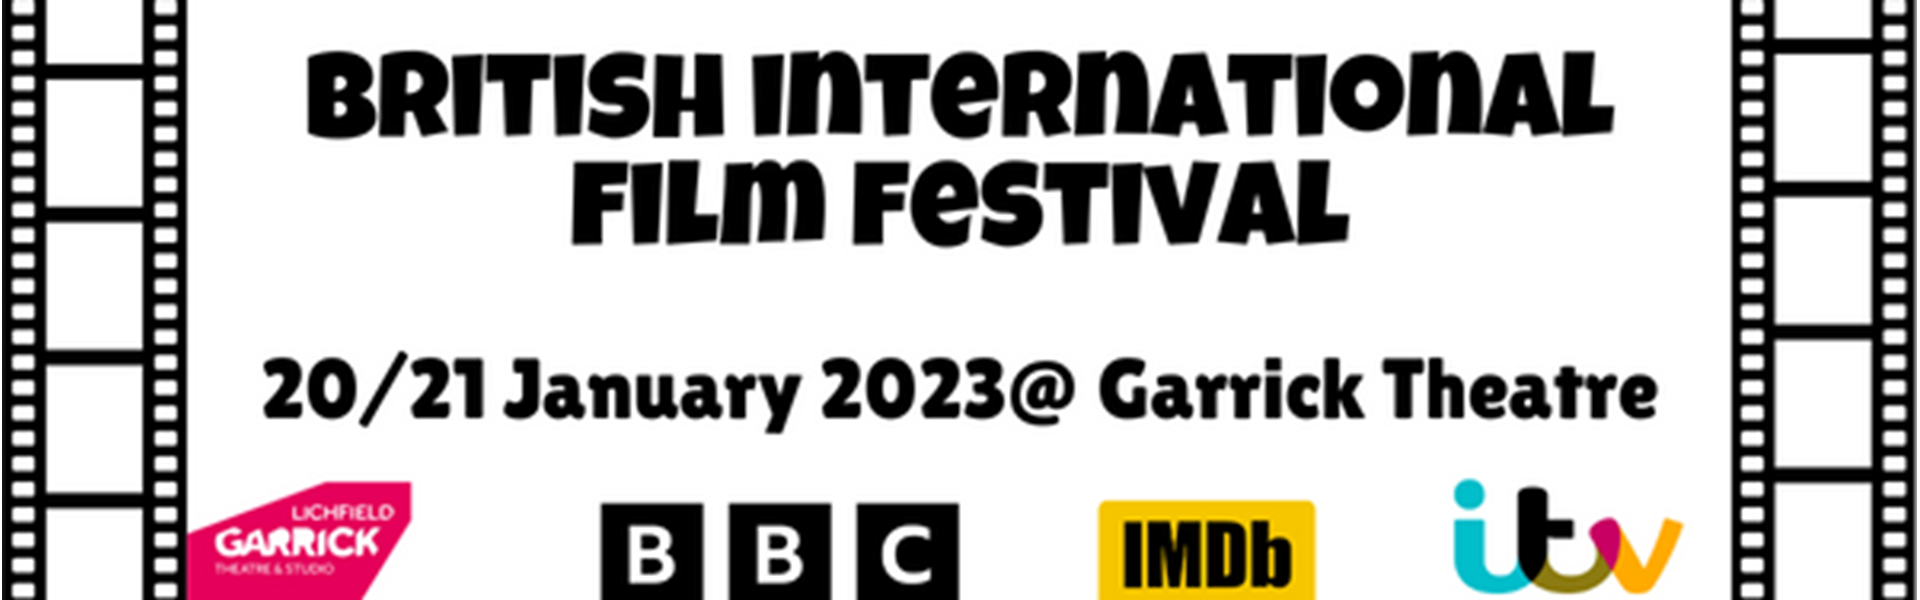 British International Film Festival